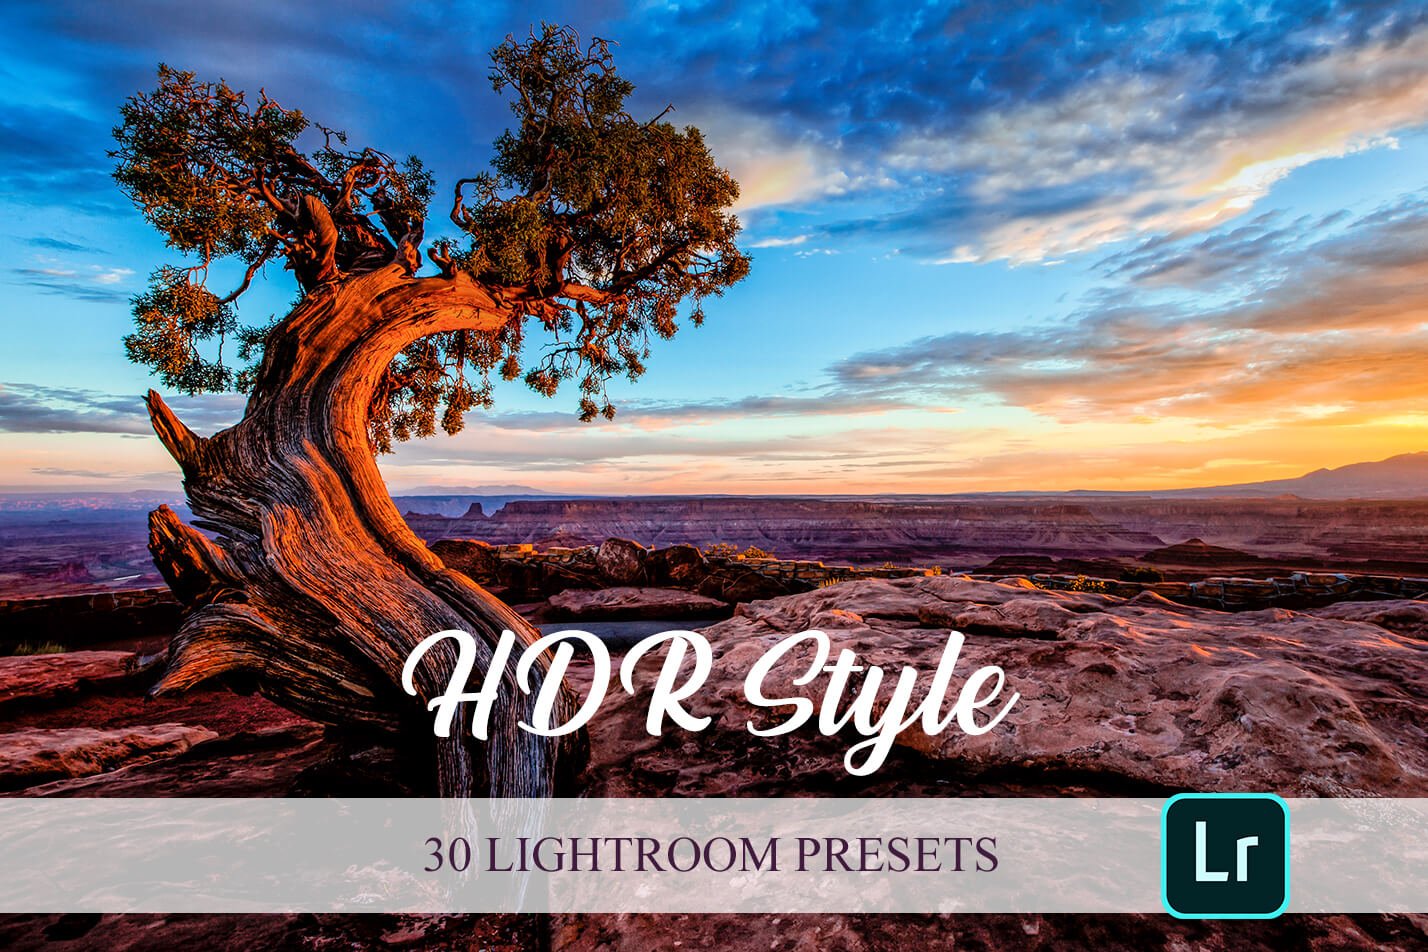 Lightroom Presets - HDR Stylecover image.